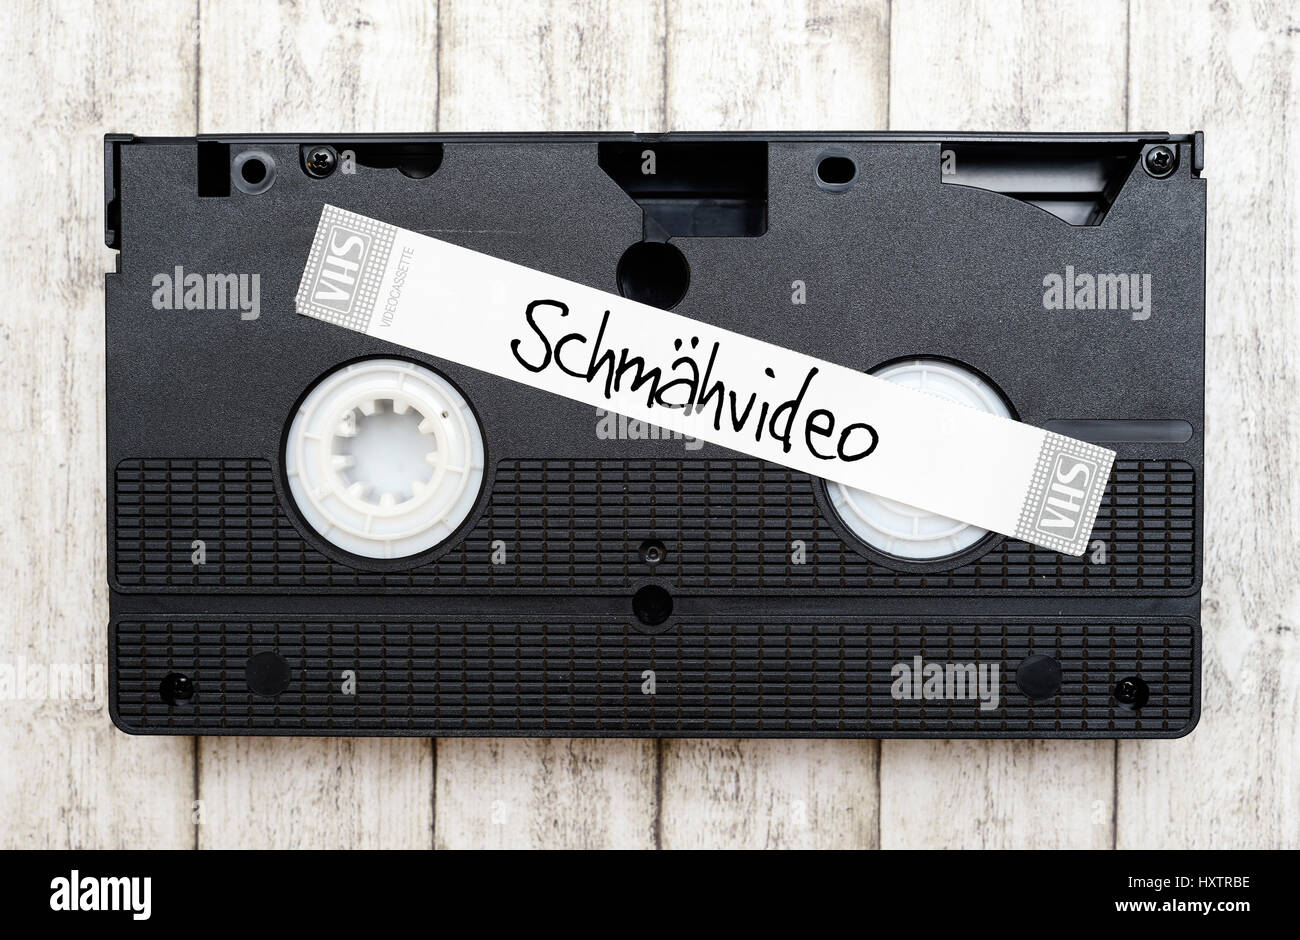 Video tape with stroke abusive video, Videokassette mit Schriftzug Schmähvideo Stock Photo